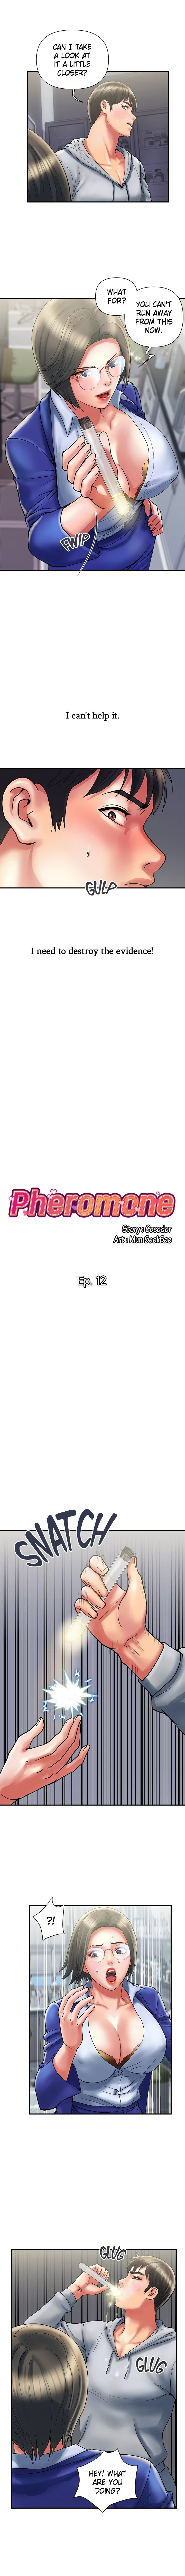 Pheromones - Chapter 12 Page 2